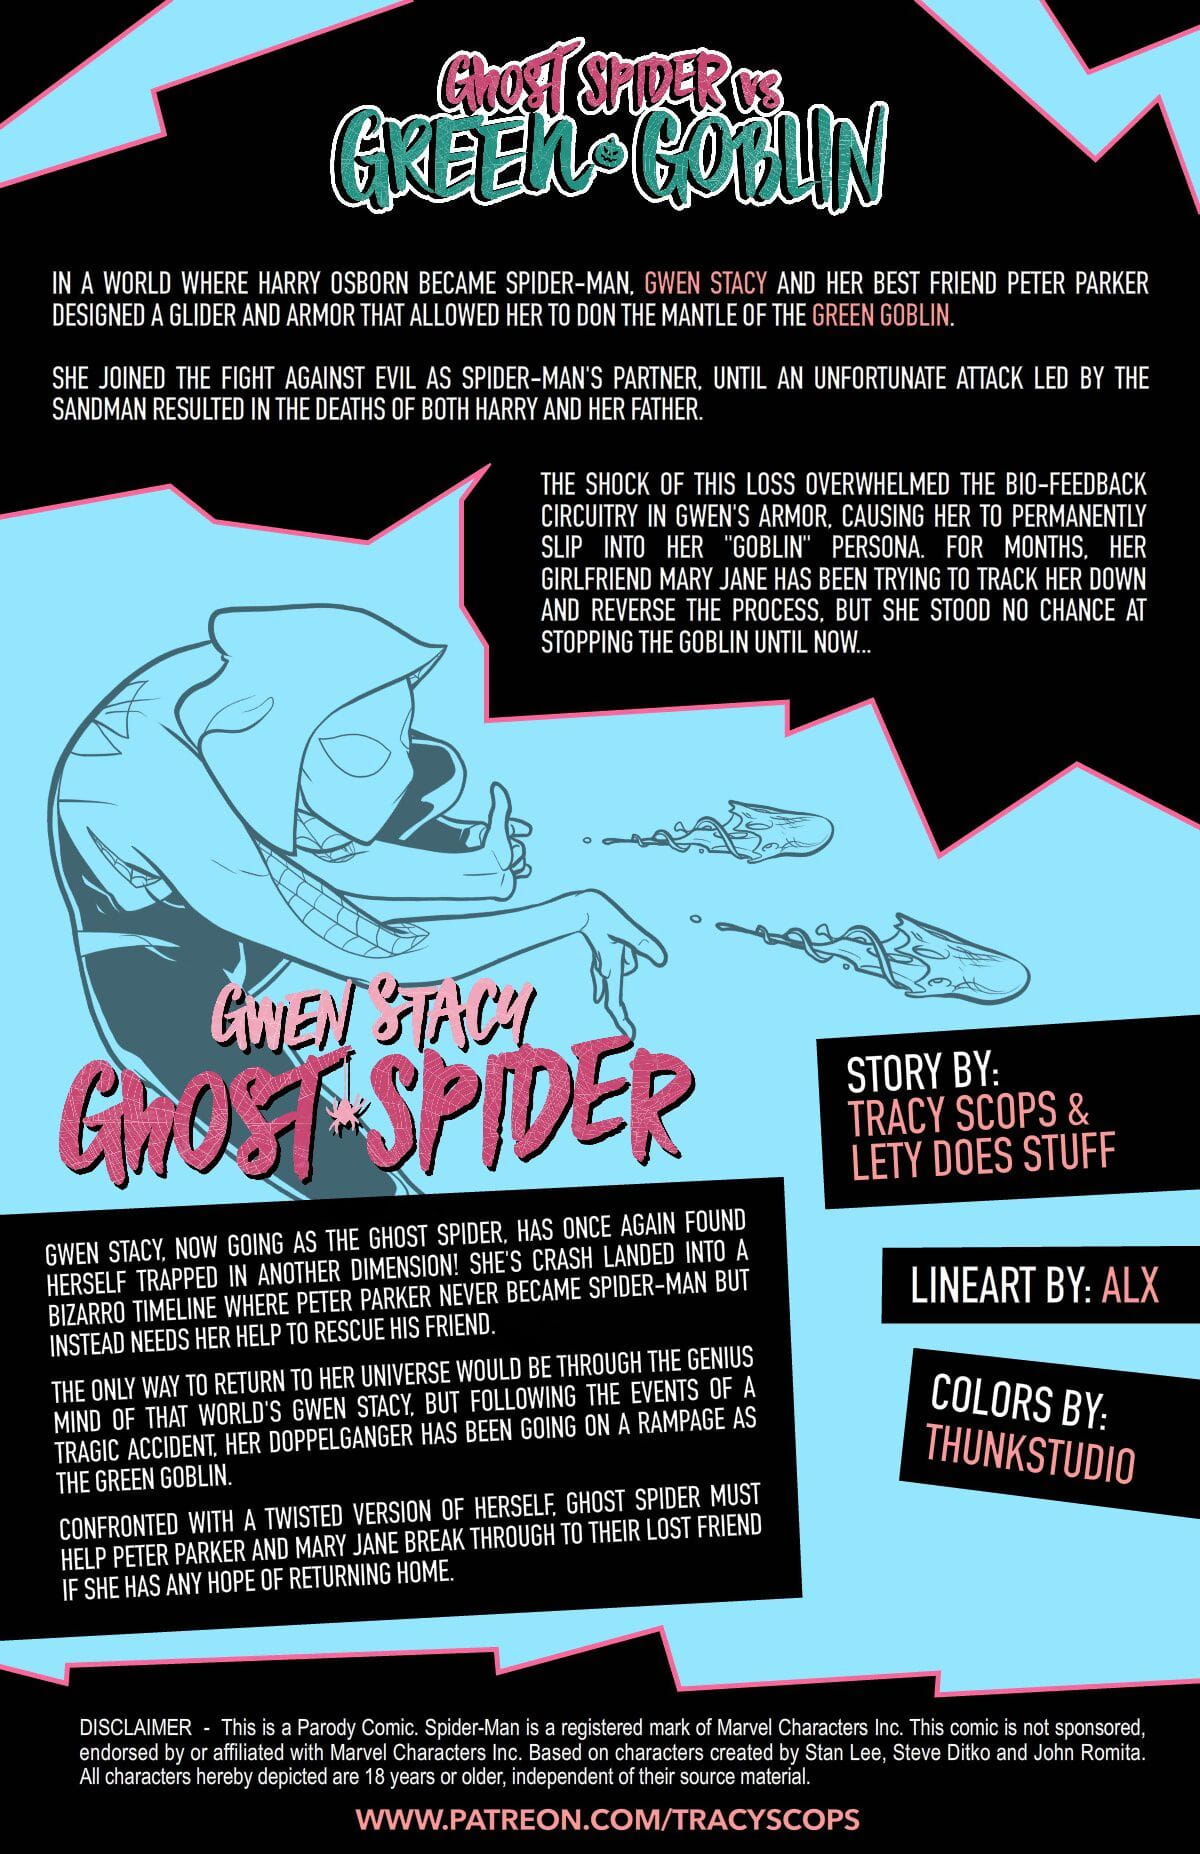 Tracy scops geest spider vs. Groen kobold page 1